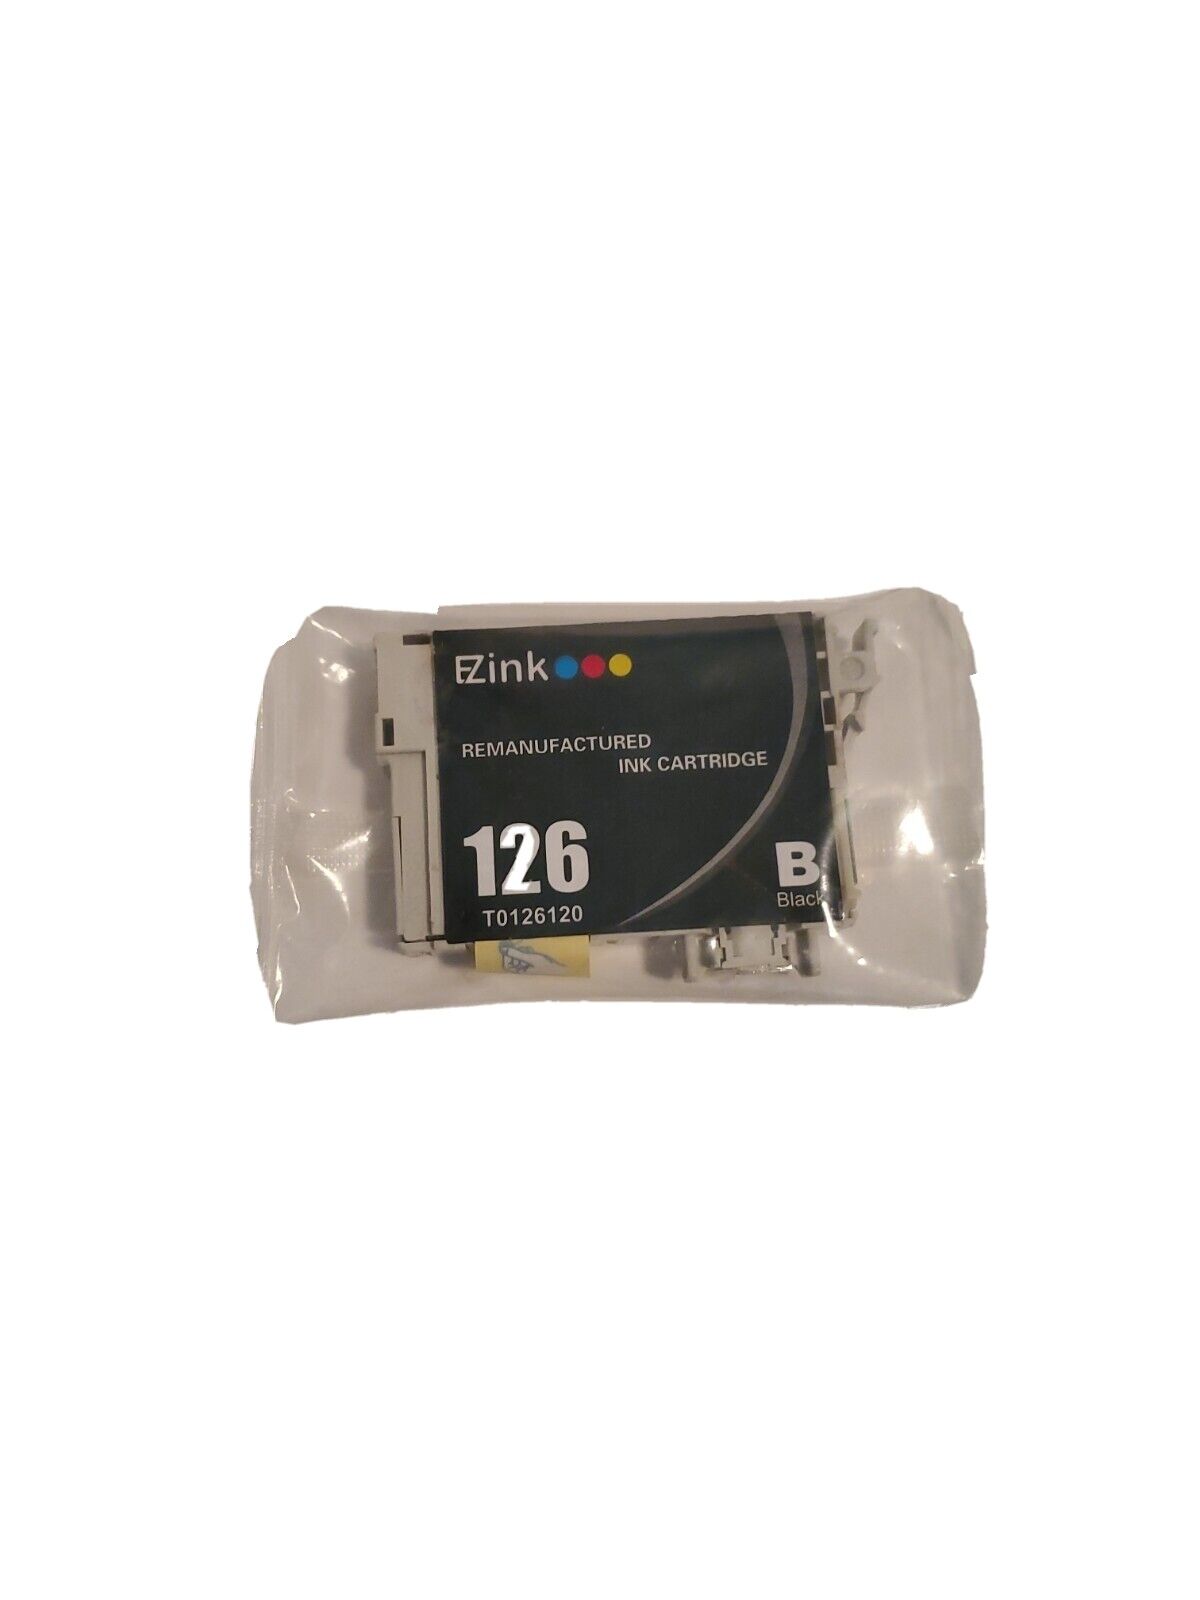 1 Compatible Ezink 126 black ink cartridge